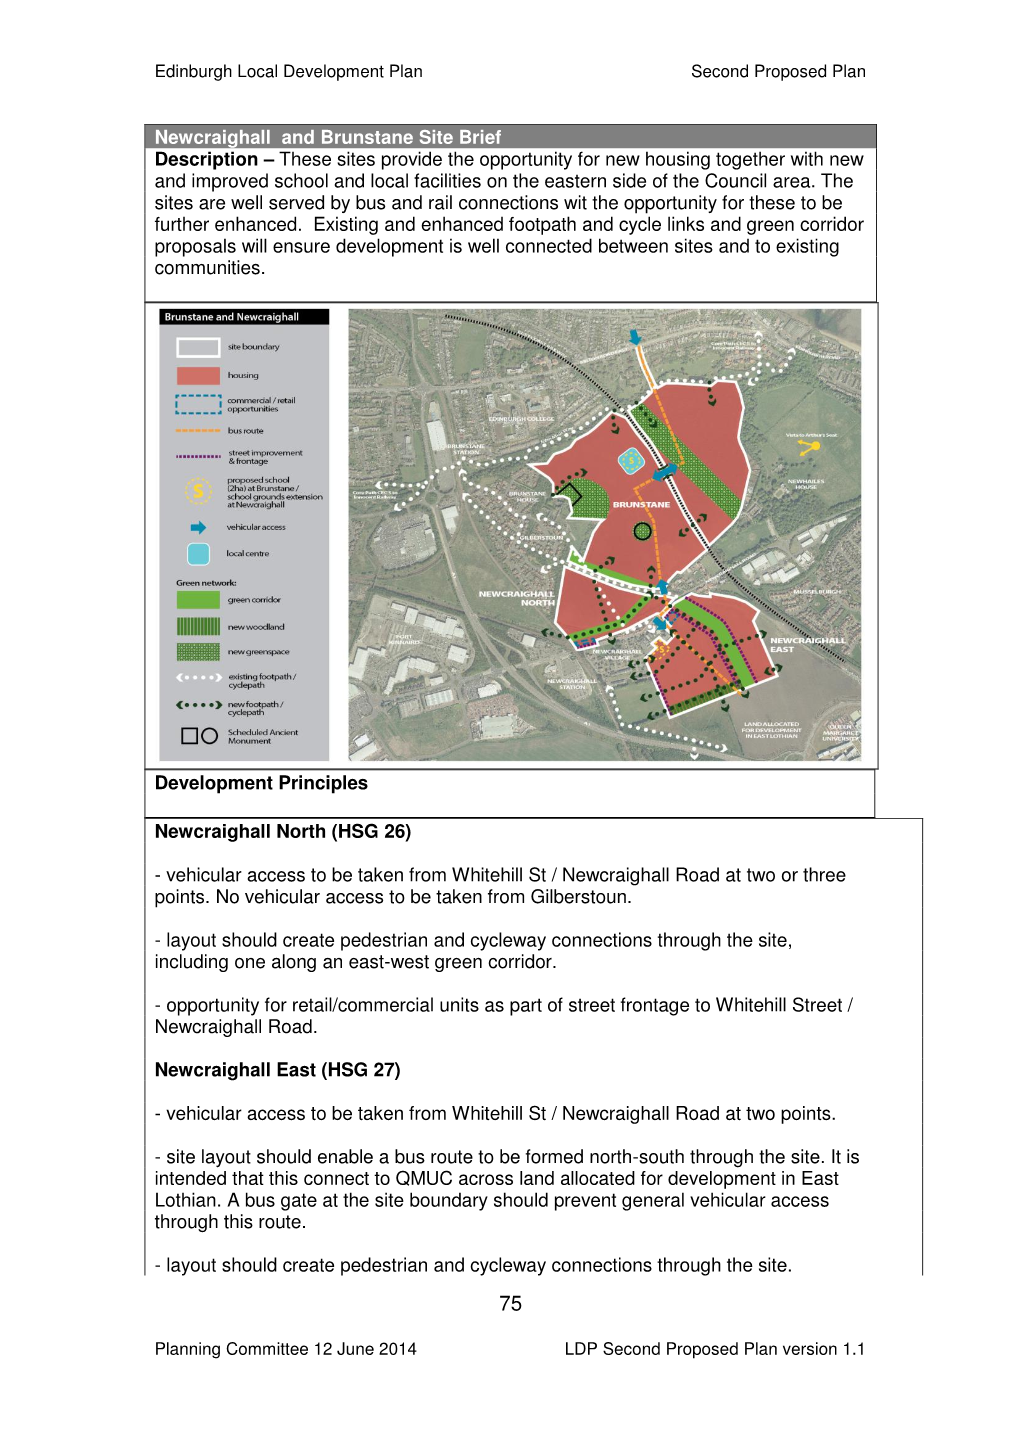 Newcraighall and Brunstane Site Brief Description